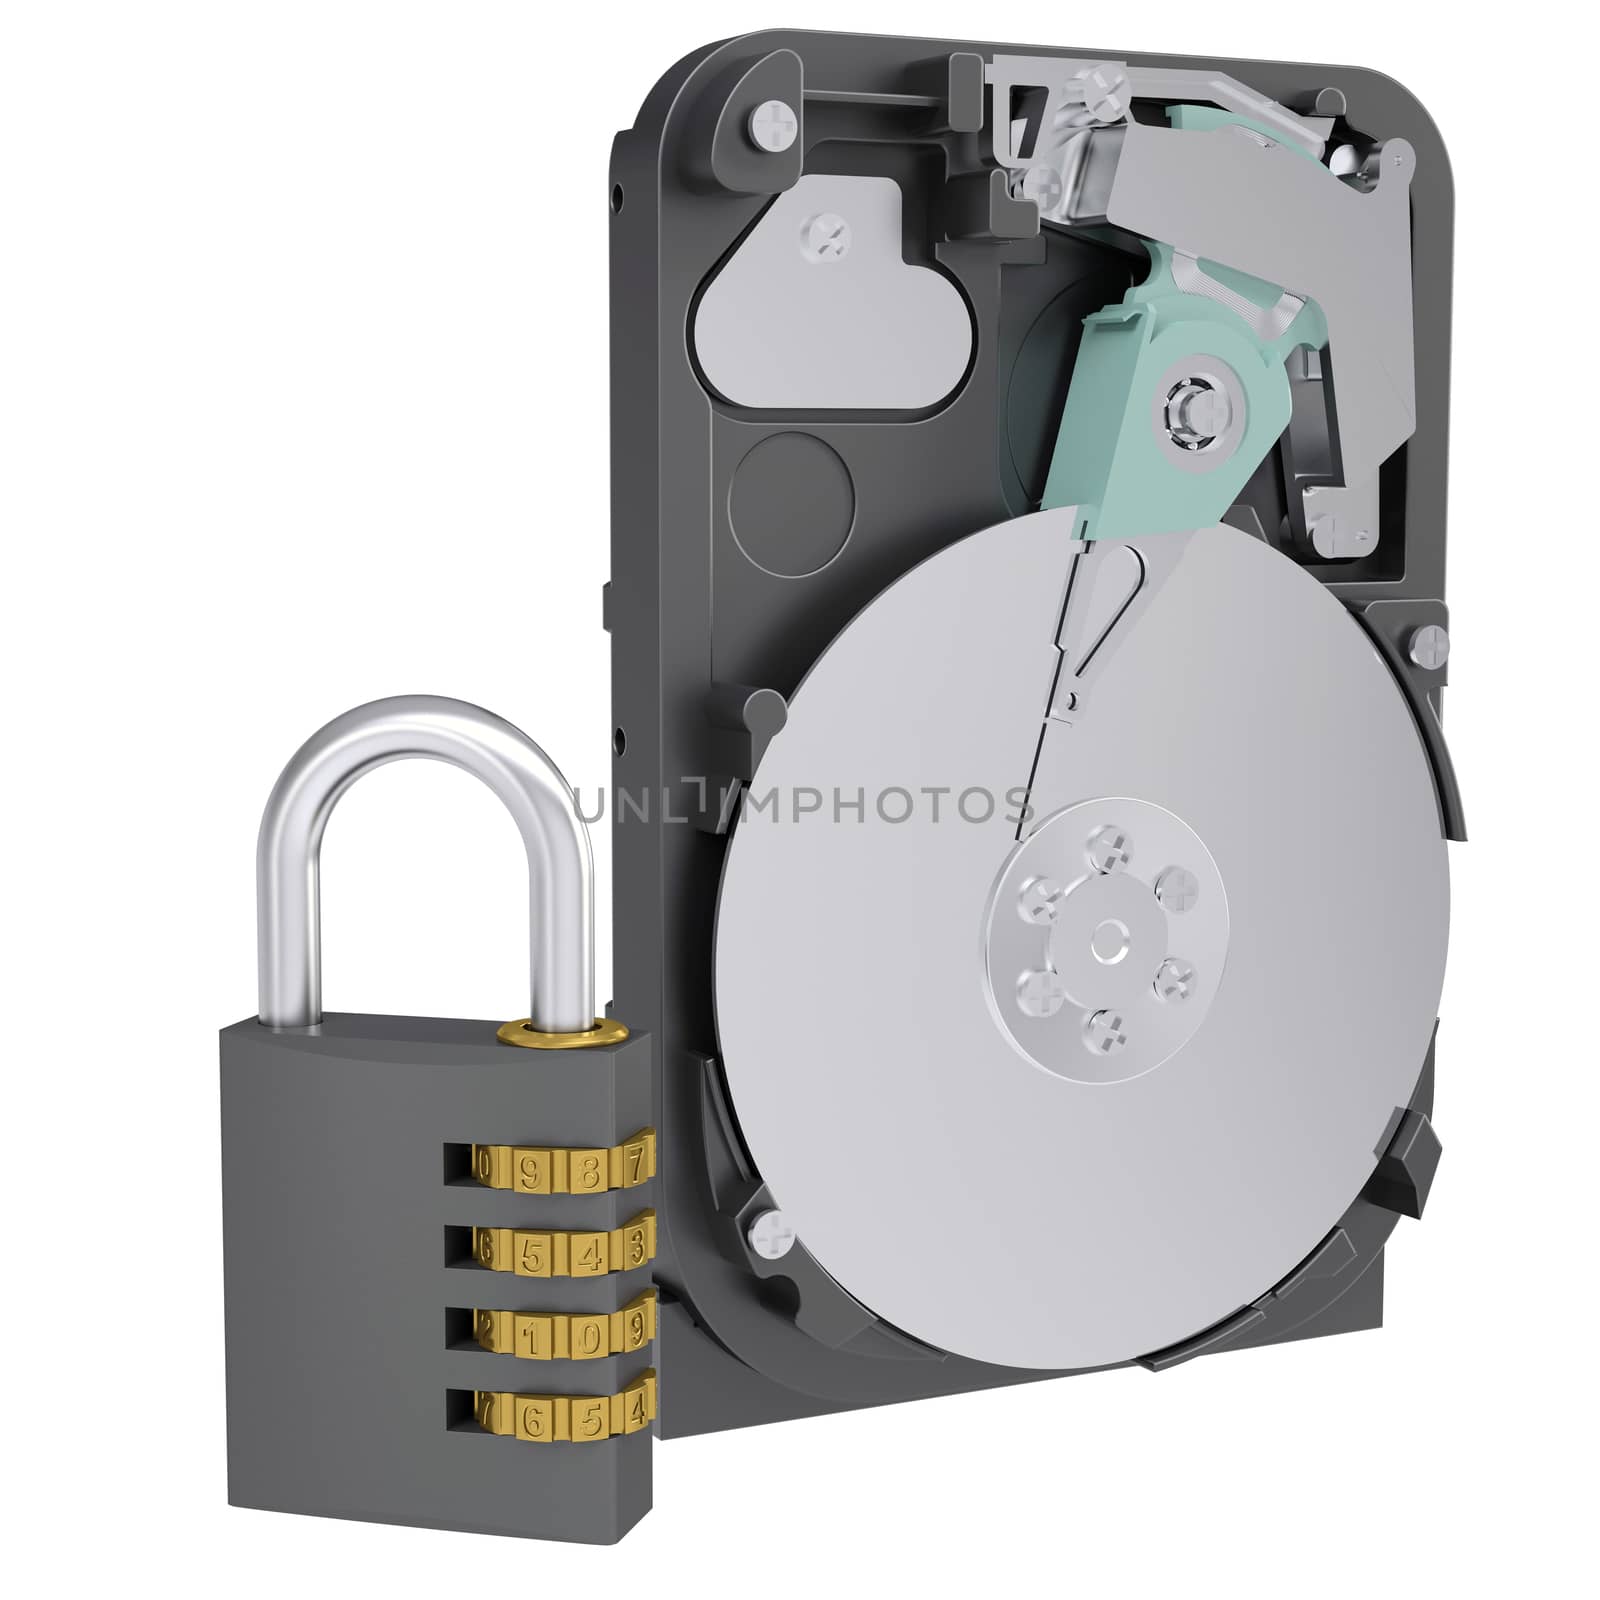 Code lock next to the hard drive by cherezoff